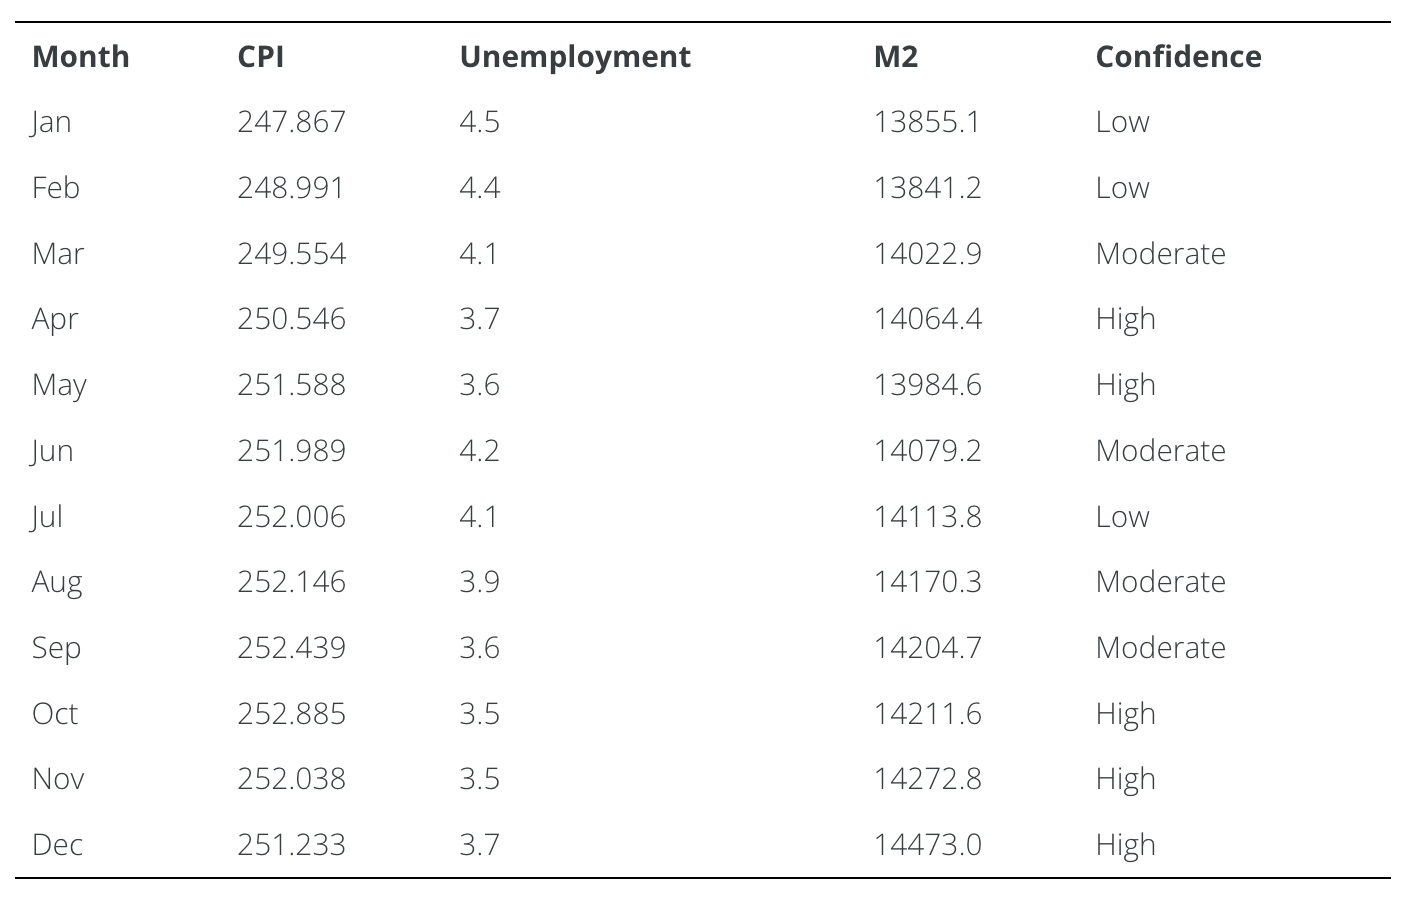 Table 17.1. U.S. Macroeconomic Data for 2018 (Not Seasonally Adjusted)